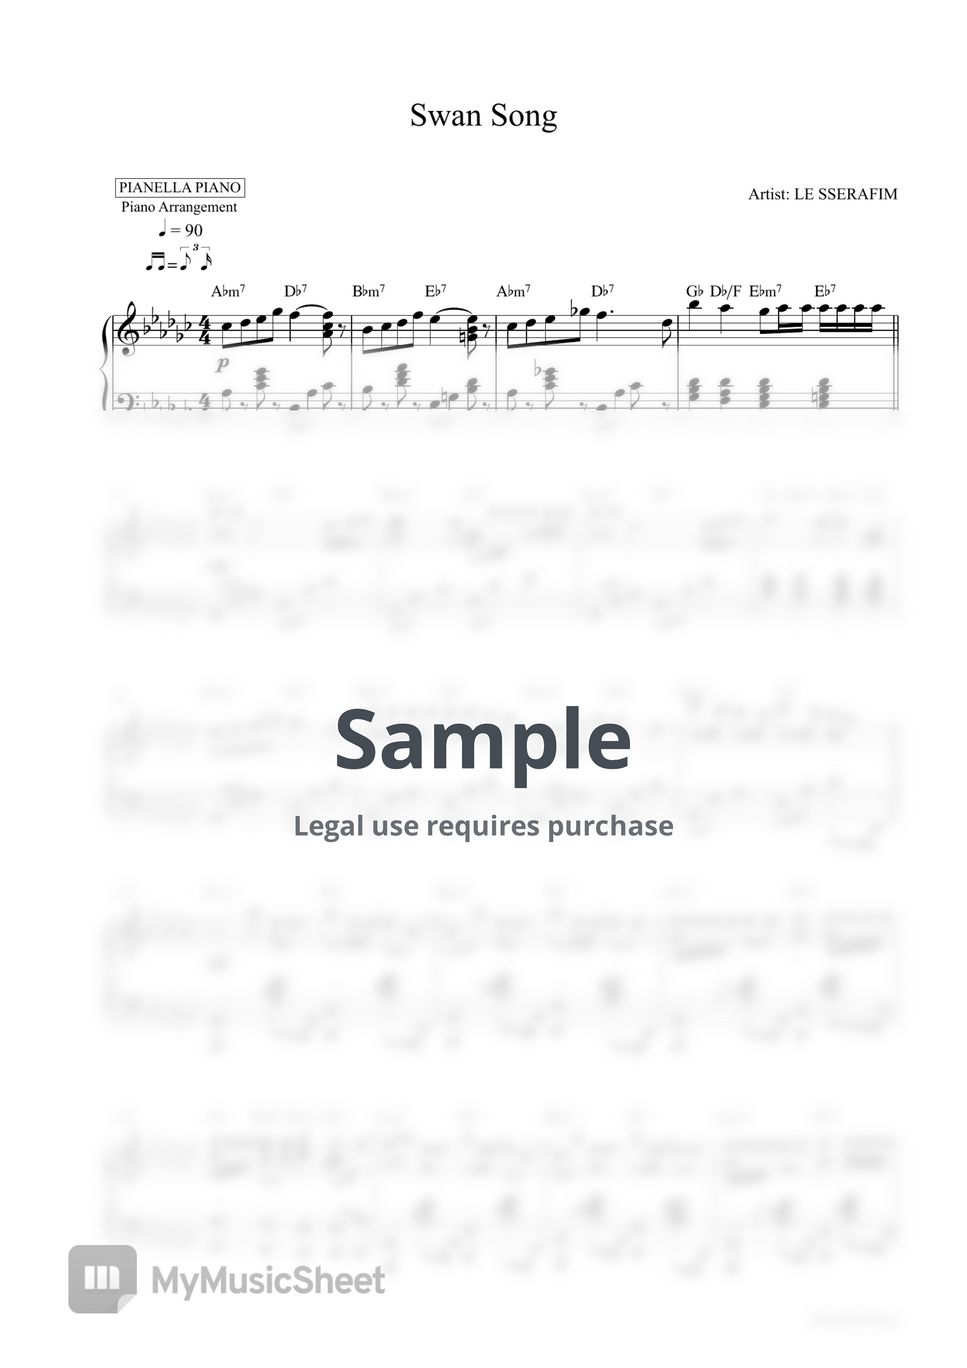 LE SSERAFIM - Swan Song (Piano Sheet) by Pianella Piano